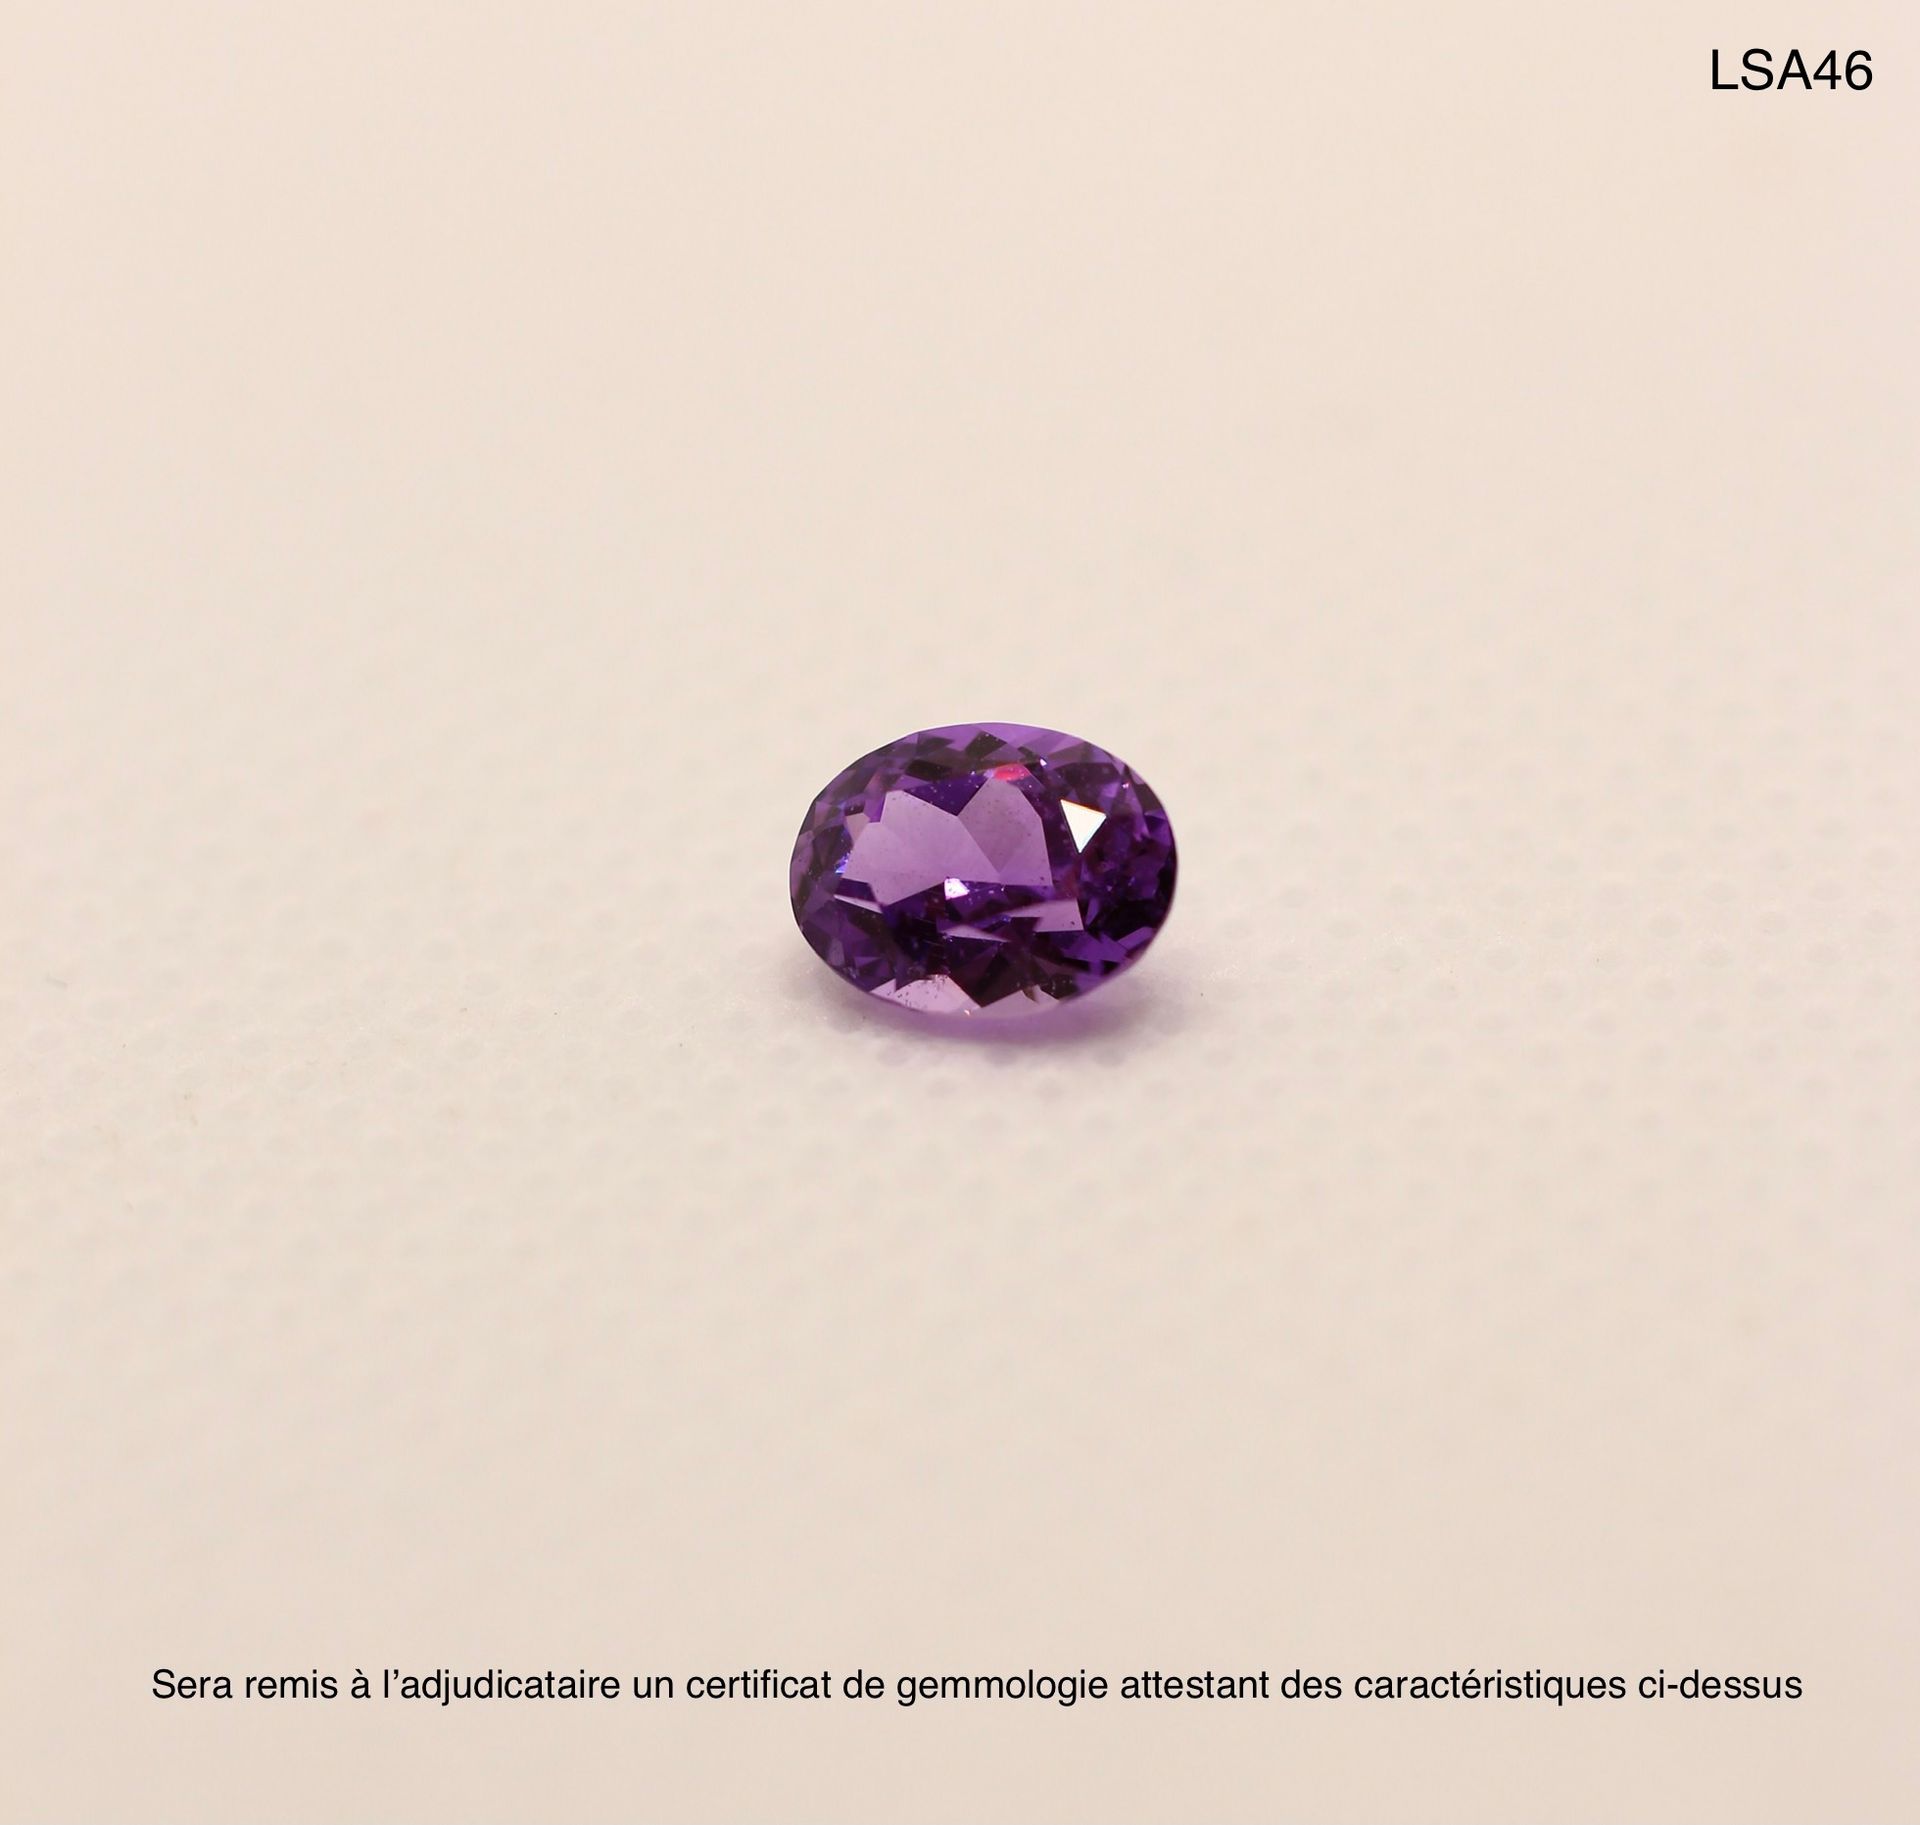 SAPHIRS TAILLÉS 拍品编号：LSA46

原产地: 马达加斯加

治疗: Ø

颜色：紫罗兰色

形状: 椭圆形

尺寸：7.05mm x 5.7&hellip;